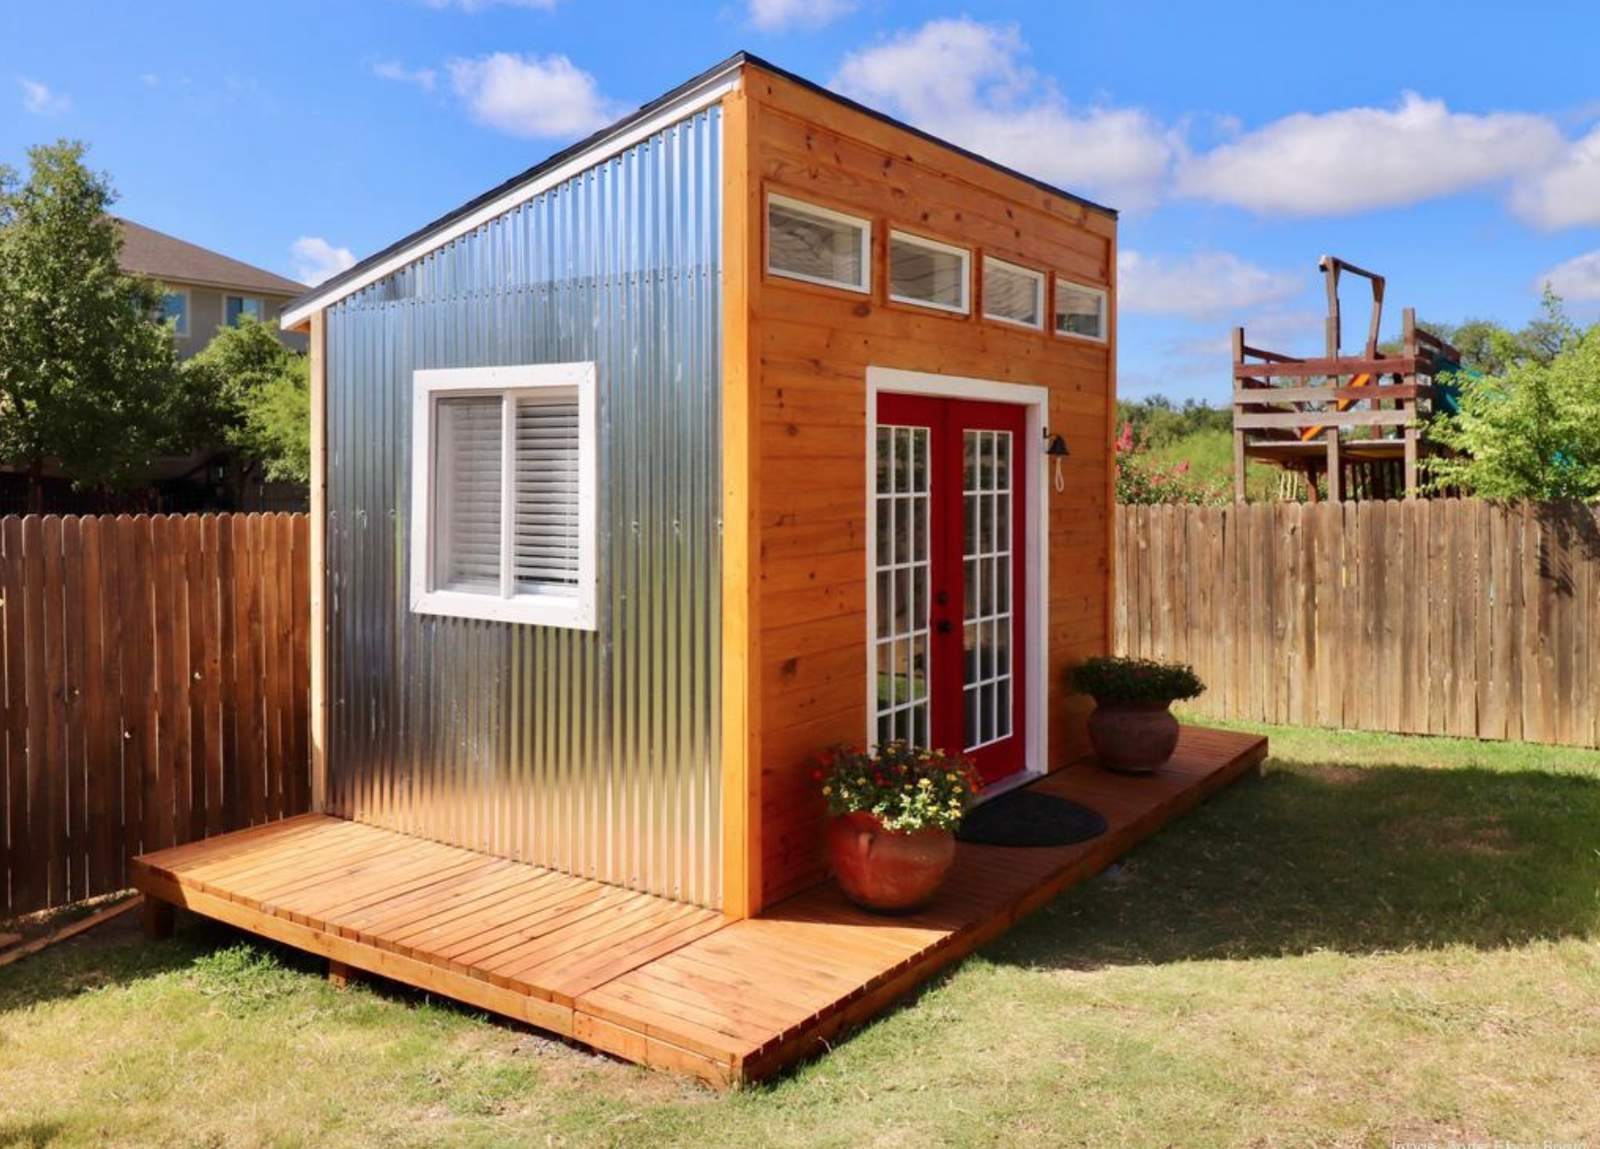 San Antonio startup to build ‘secret garden homes’ in backyards